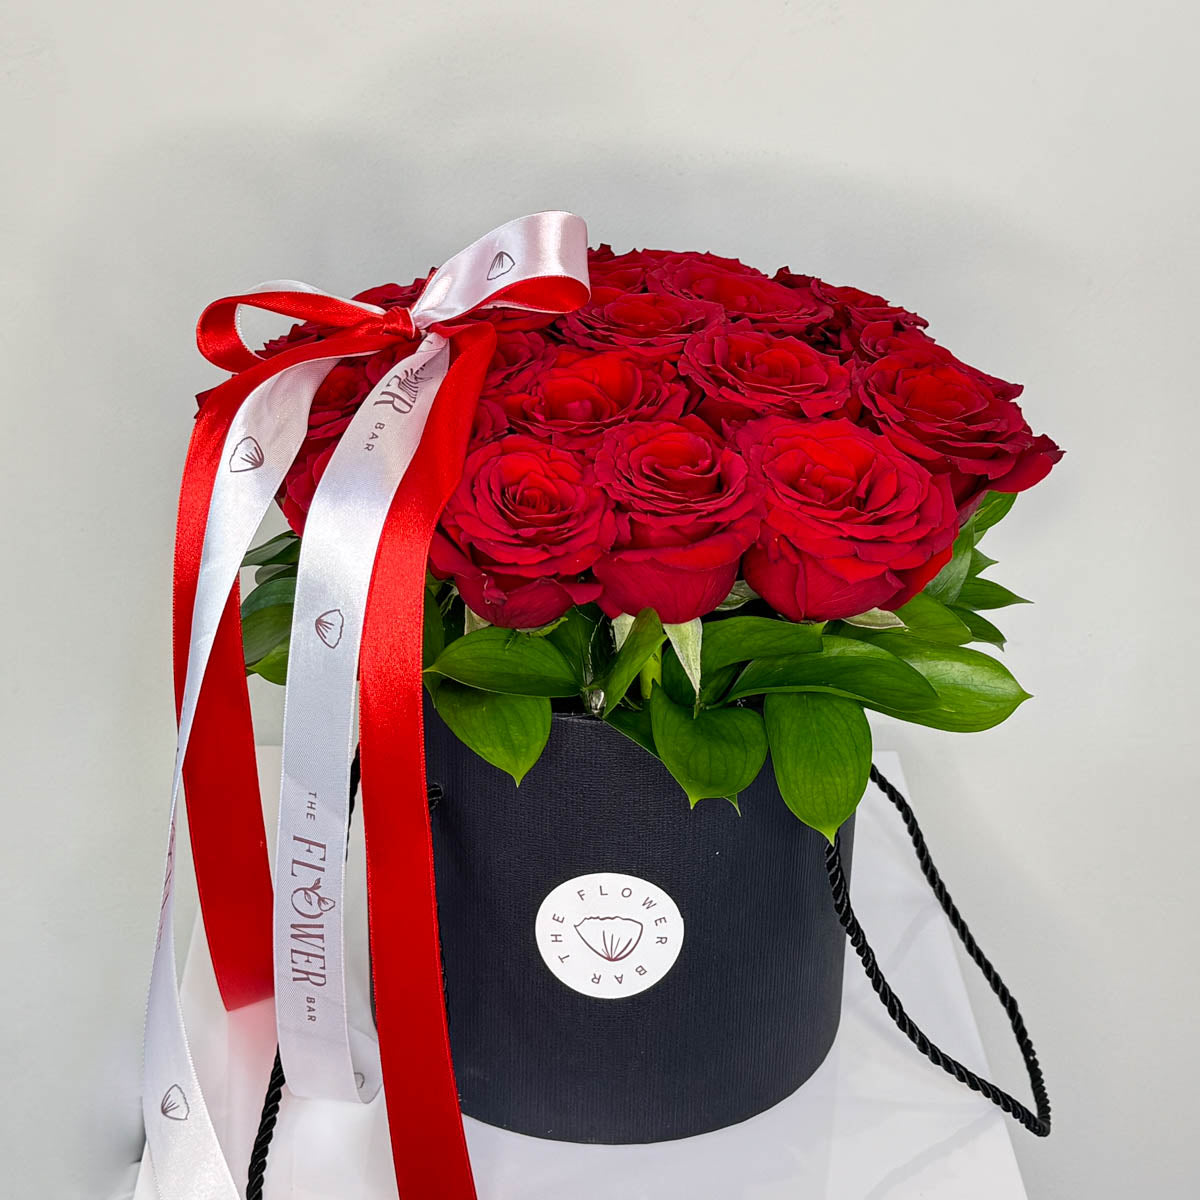 Black Box in 19 Red Roses